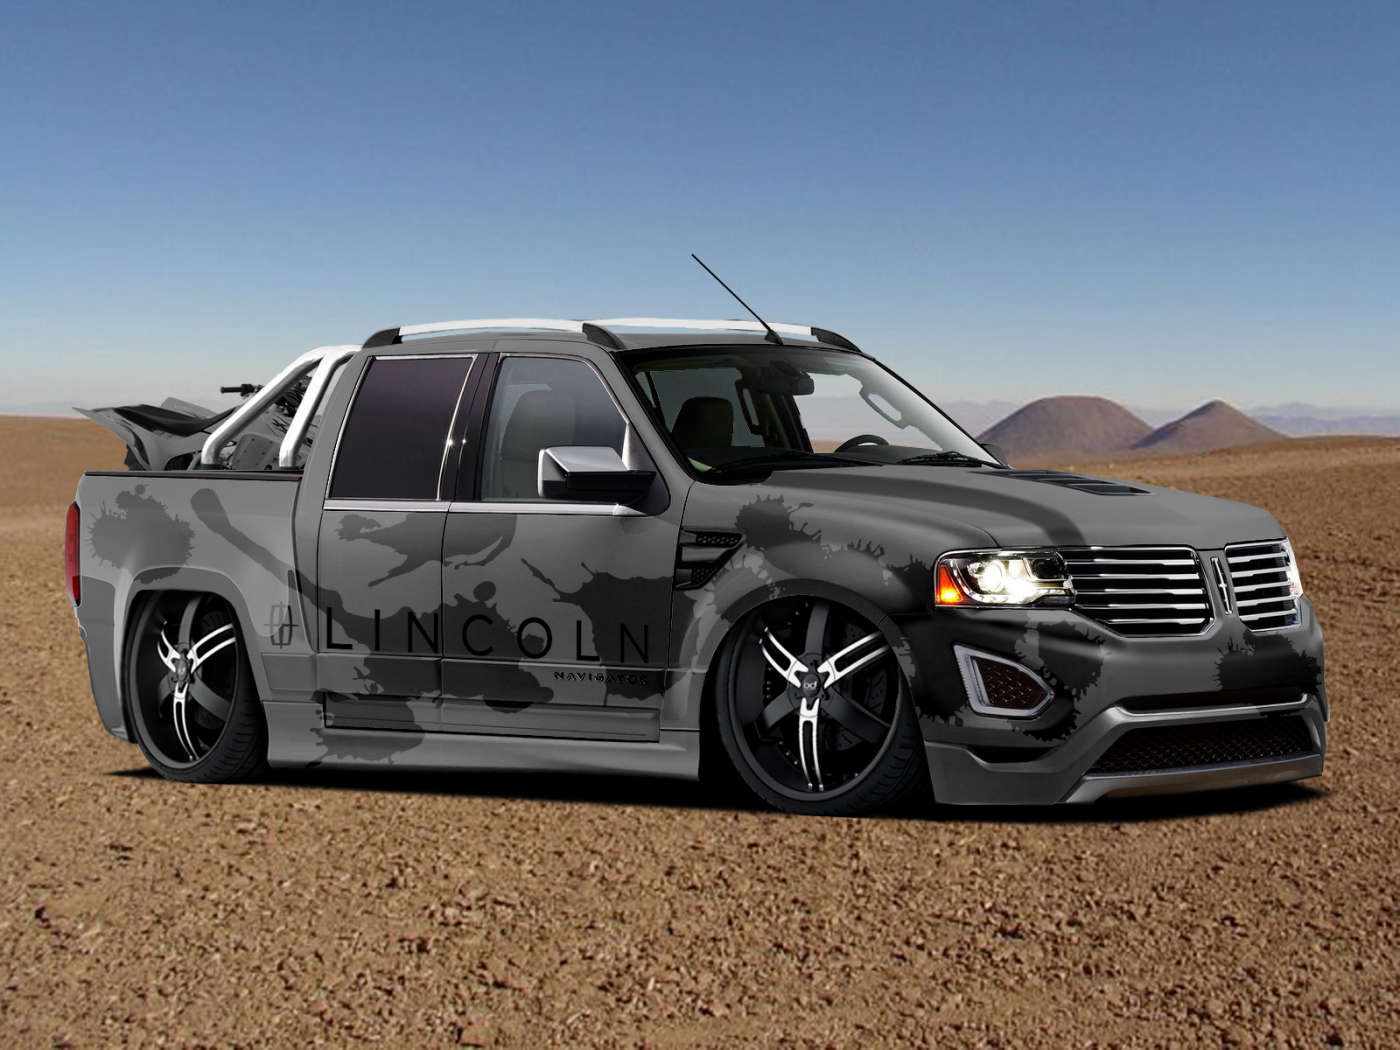 Автомобиль марки Lincoln модели Navigator 2014